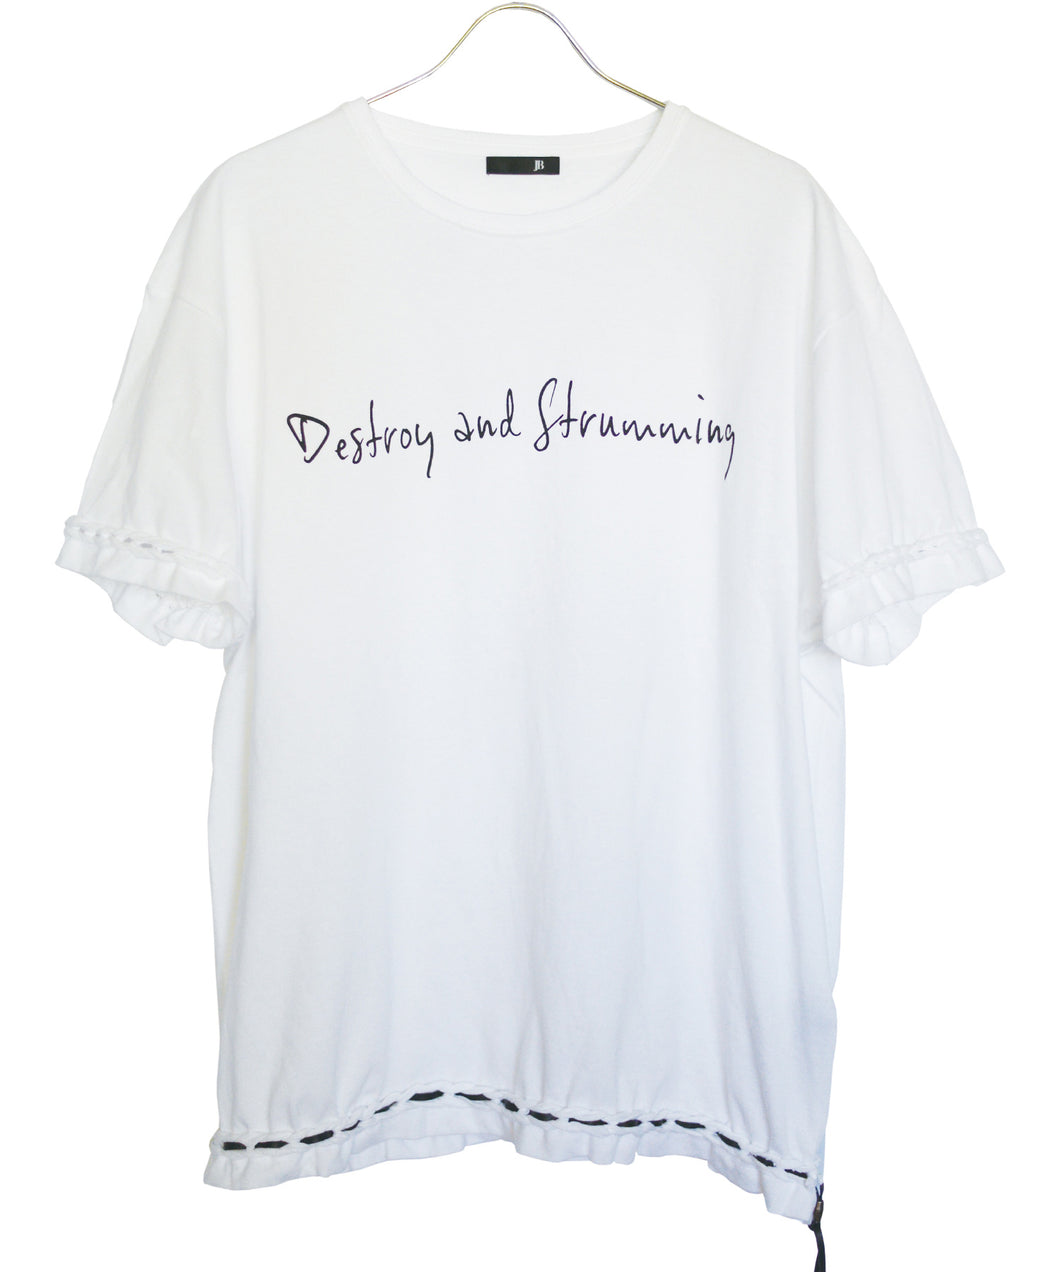 STRUM × JOHNNY BUSINESS『Destroy and Strumming』Tシャツ - ホワイト